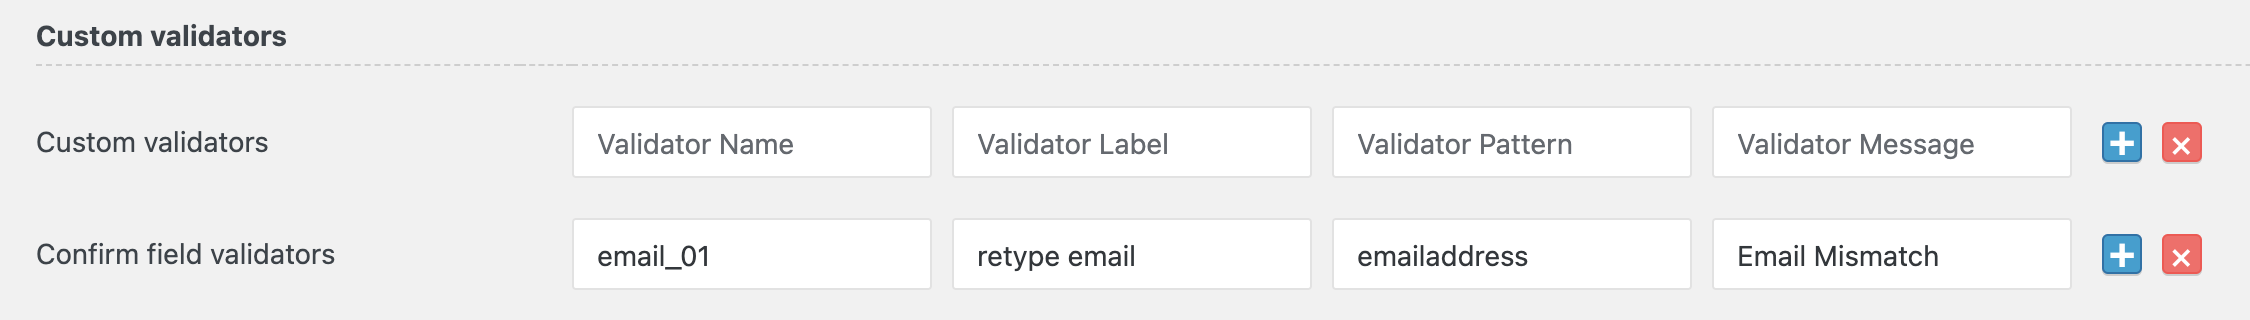 Custom_field_validator_example.png